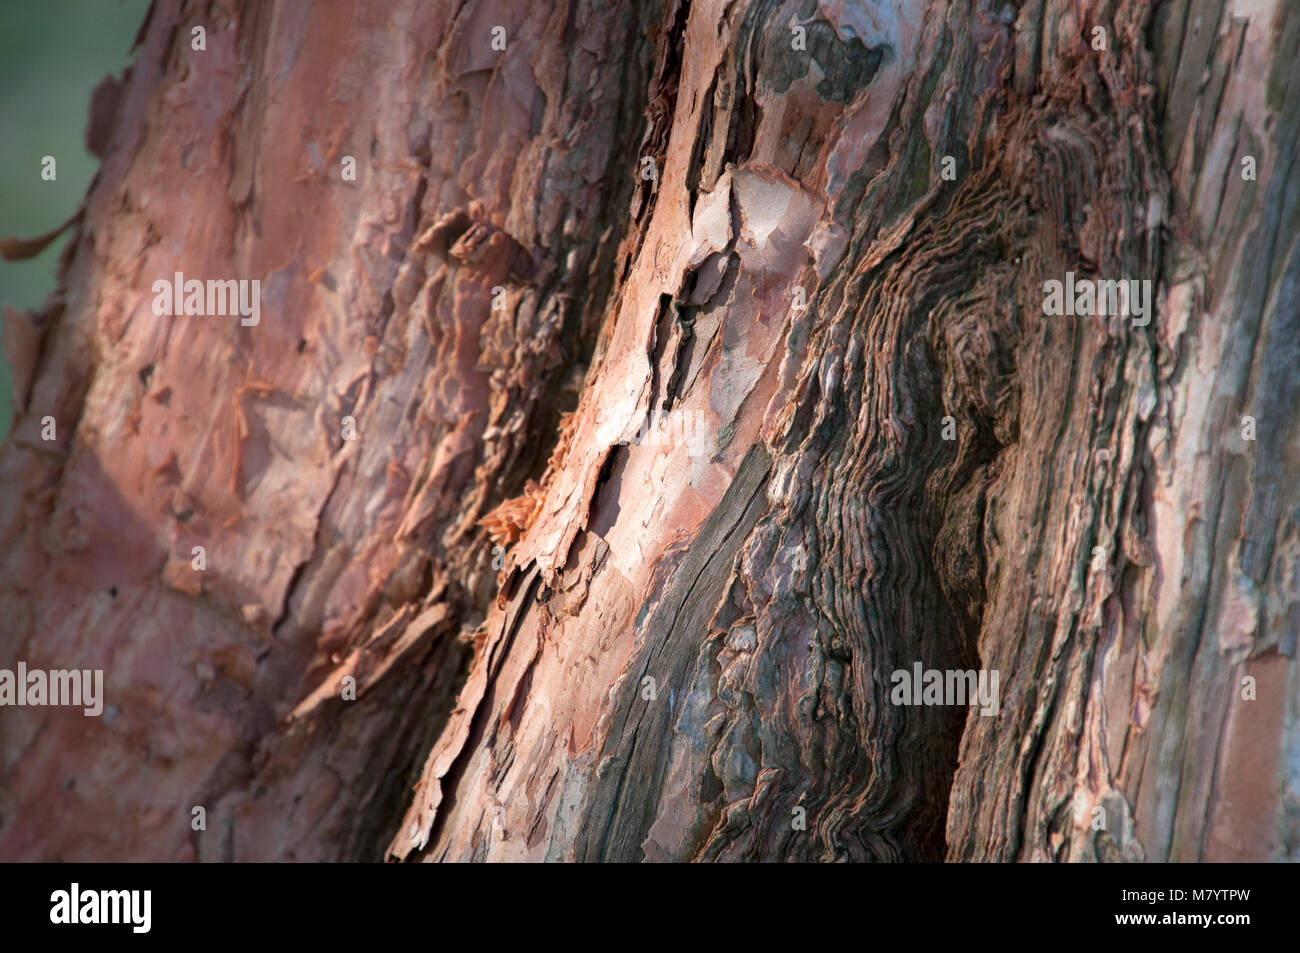 Sydney Australia, textured bark of a Biconvex paperbark tree Stock Photo